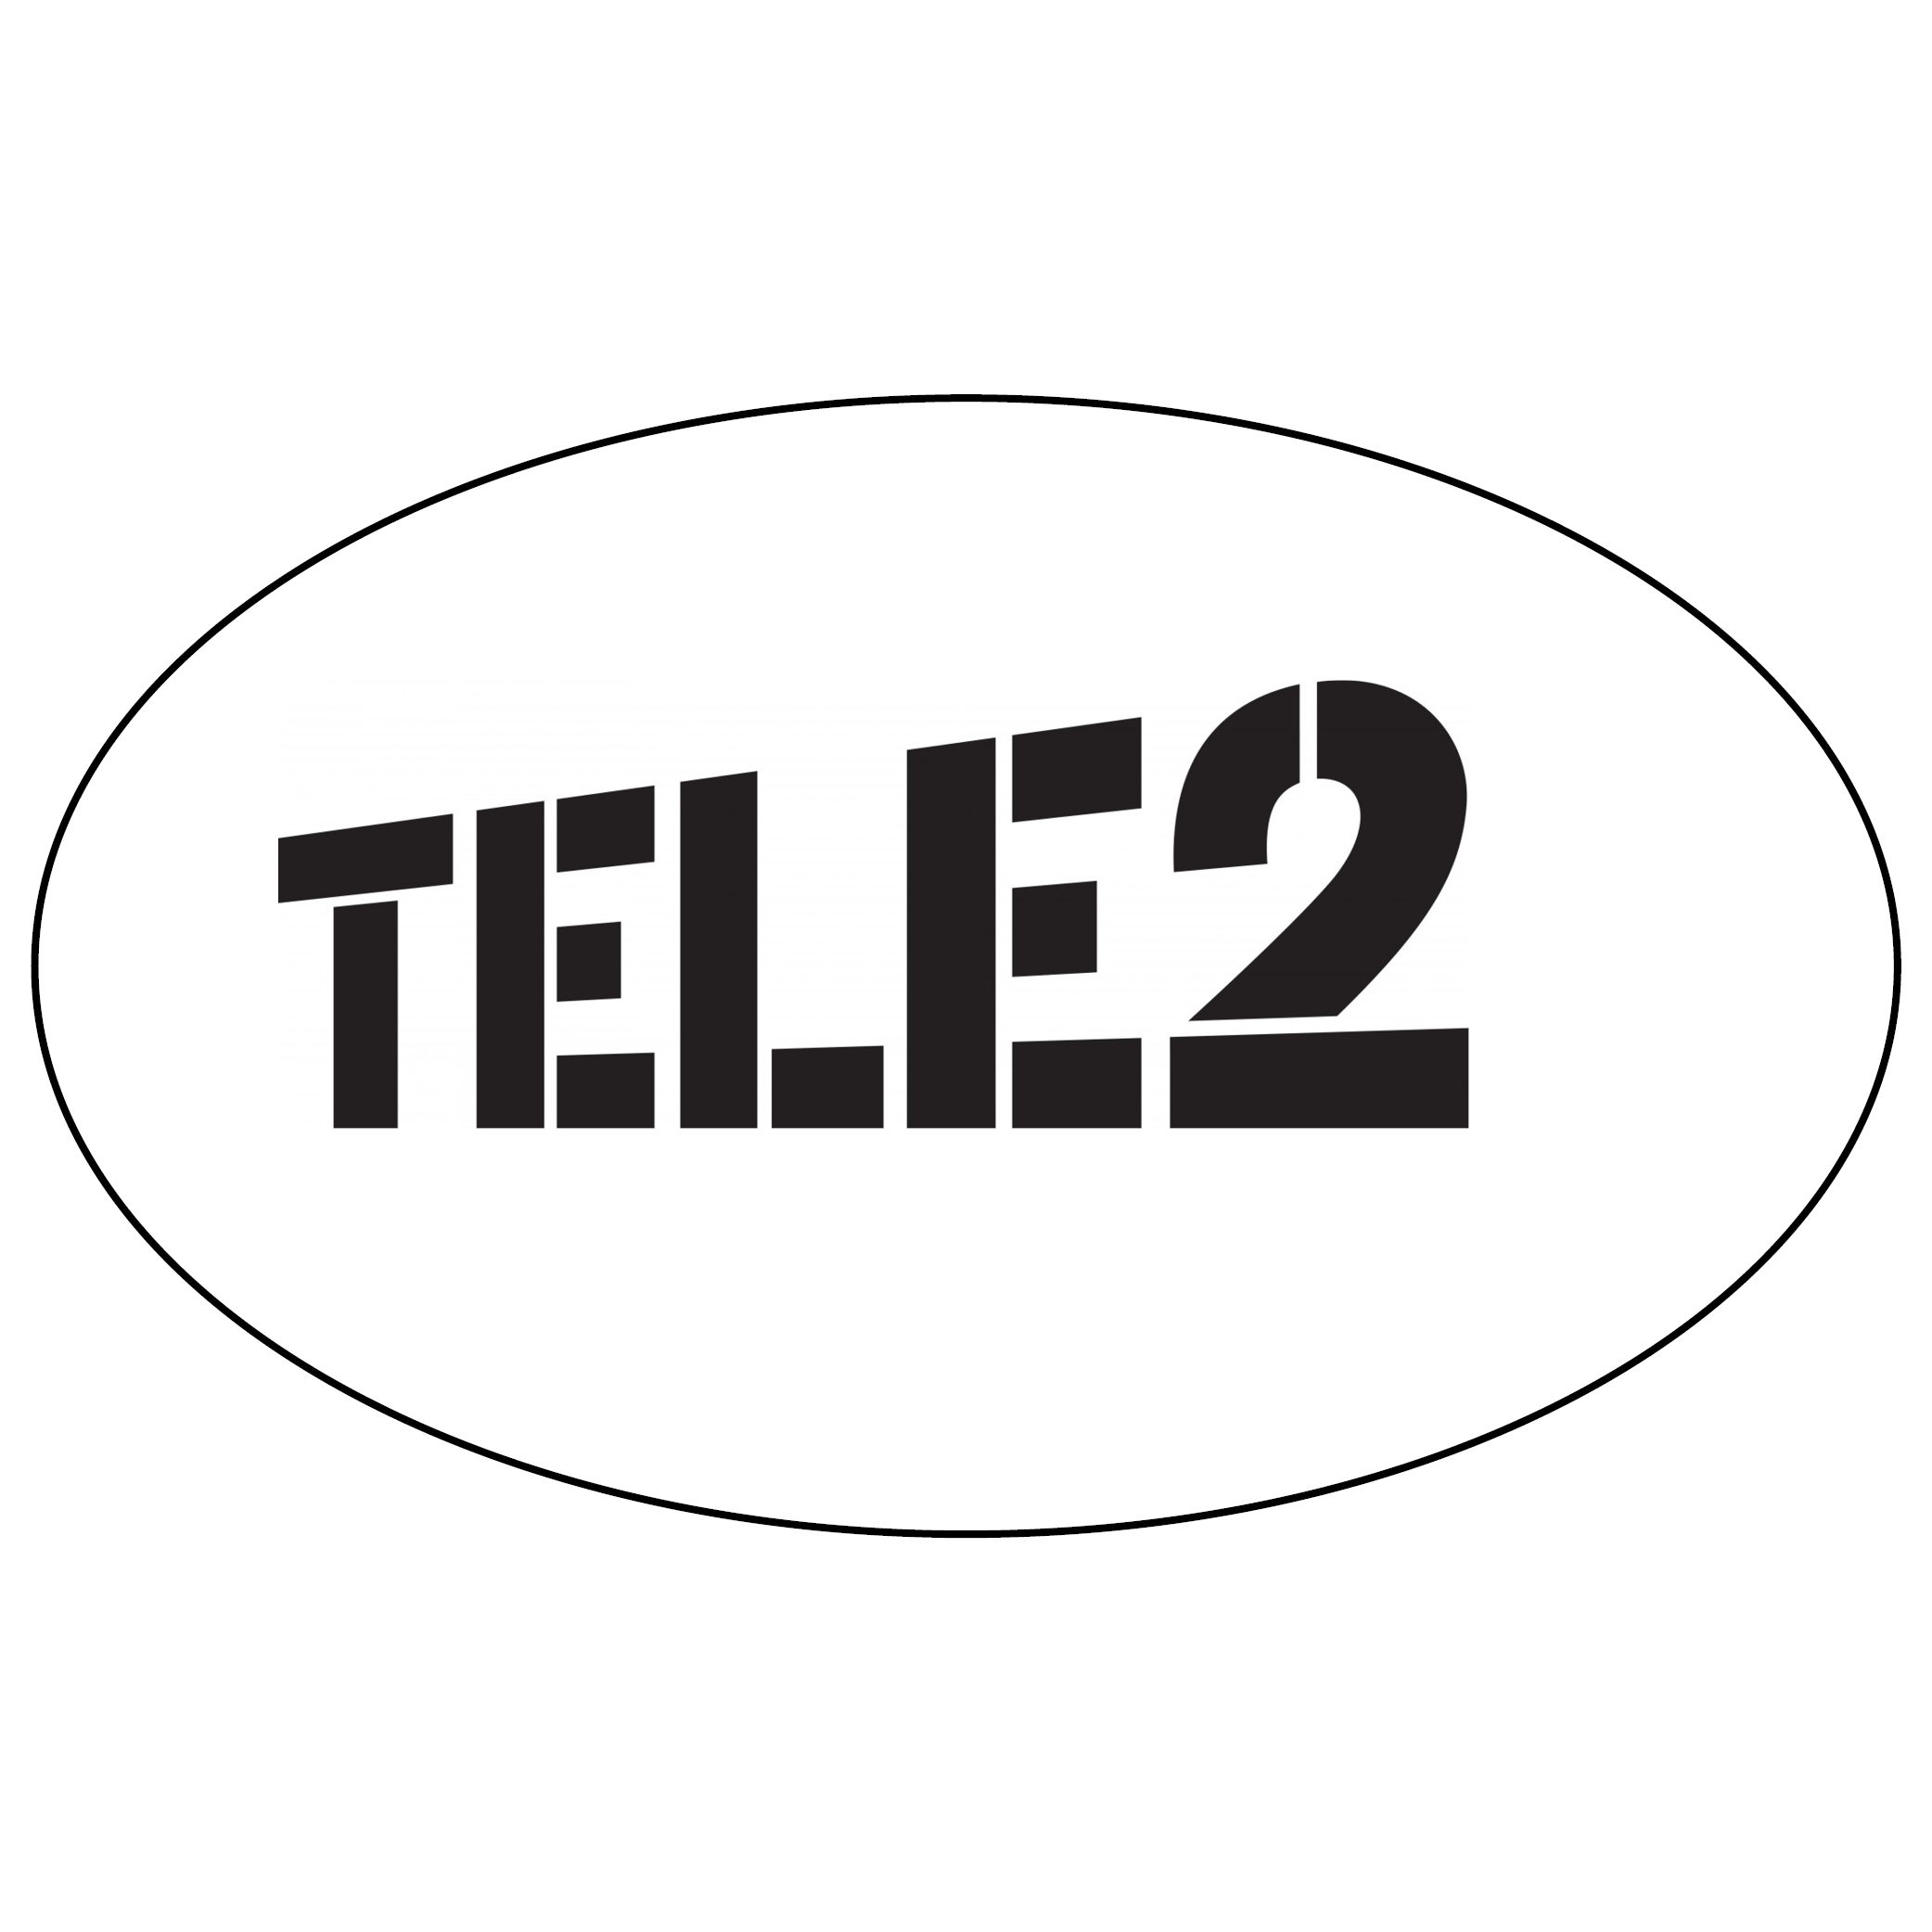 Tele2.jpg